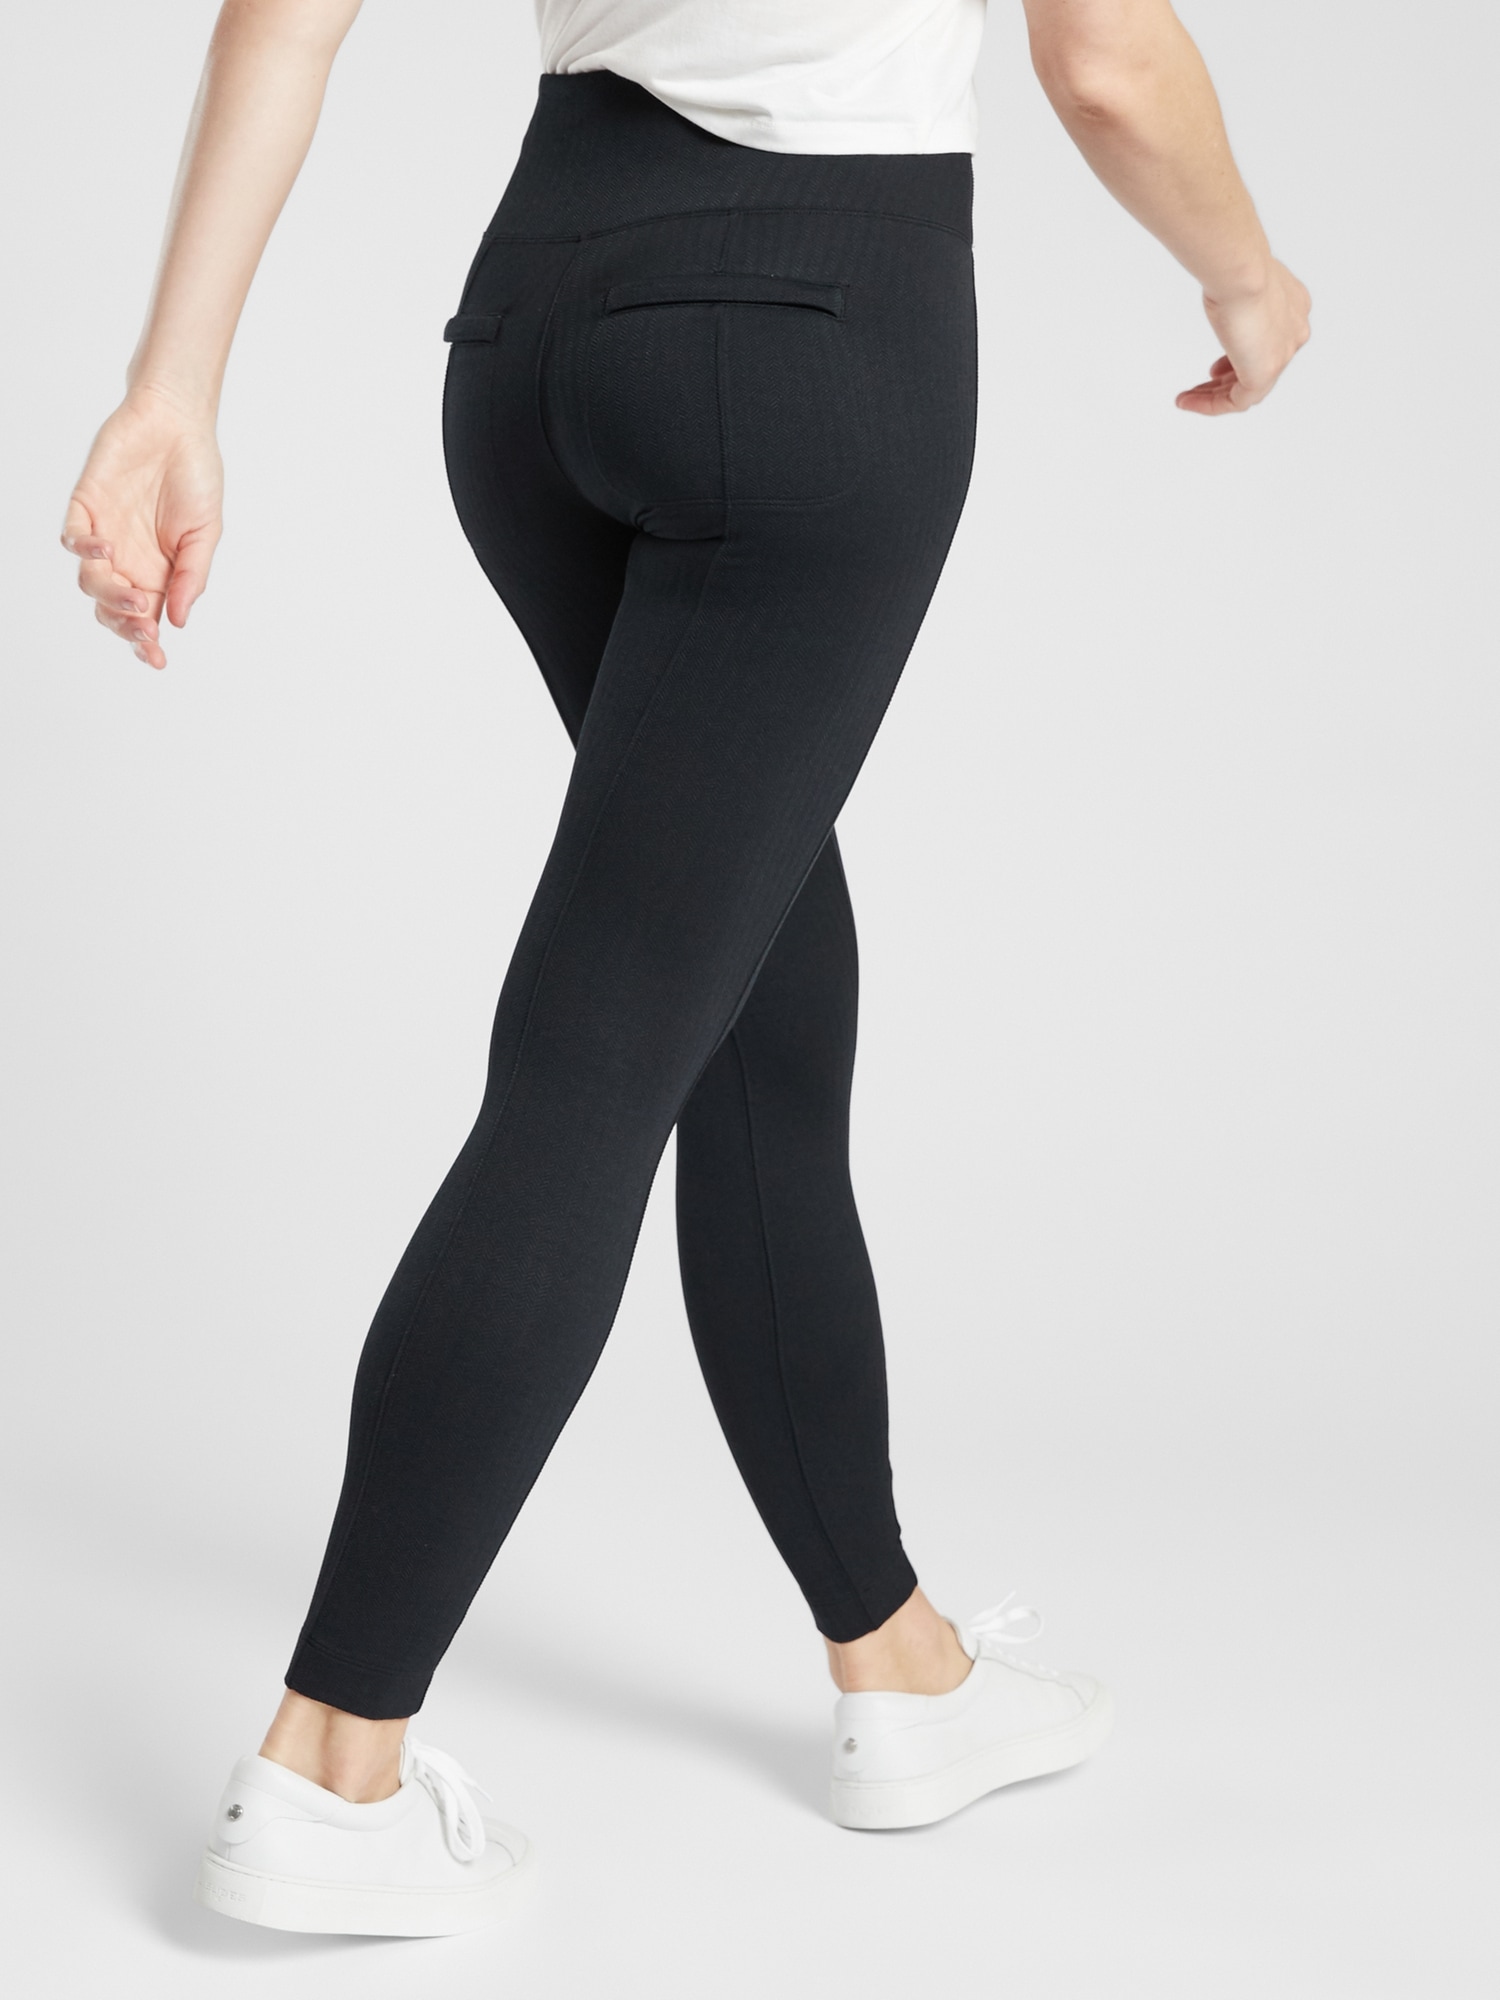 Athleta Grey herringbone leggings with zip pockets size Medium